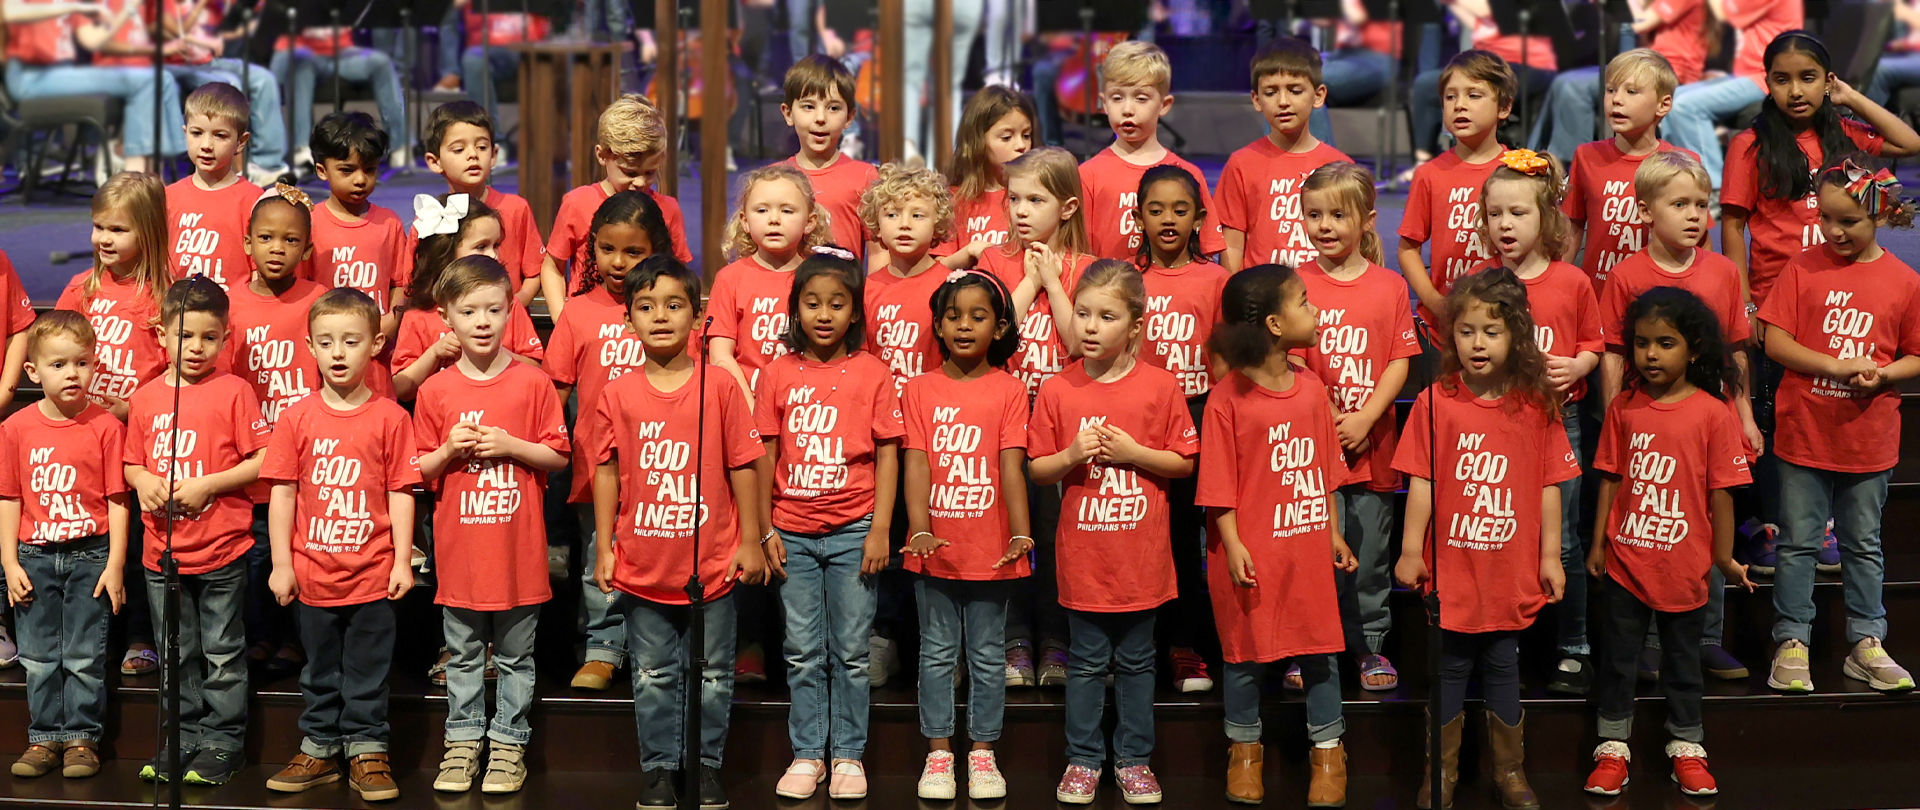 Wee Praisers
Choir for Age 4 – Kindergarten
